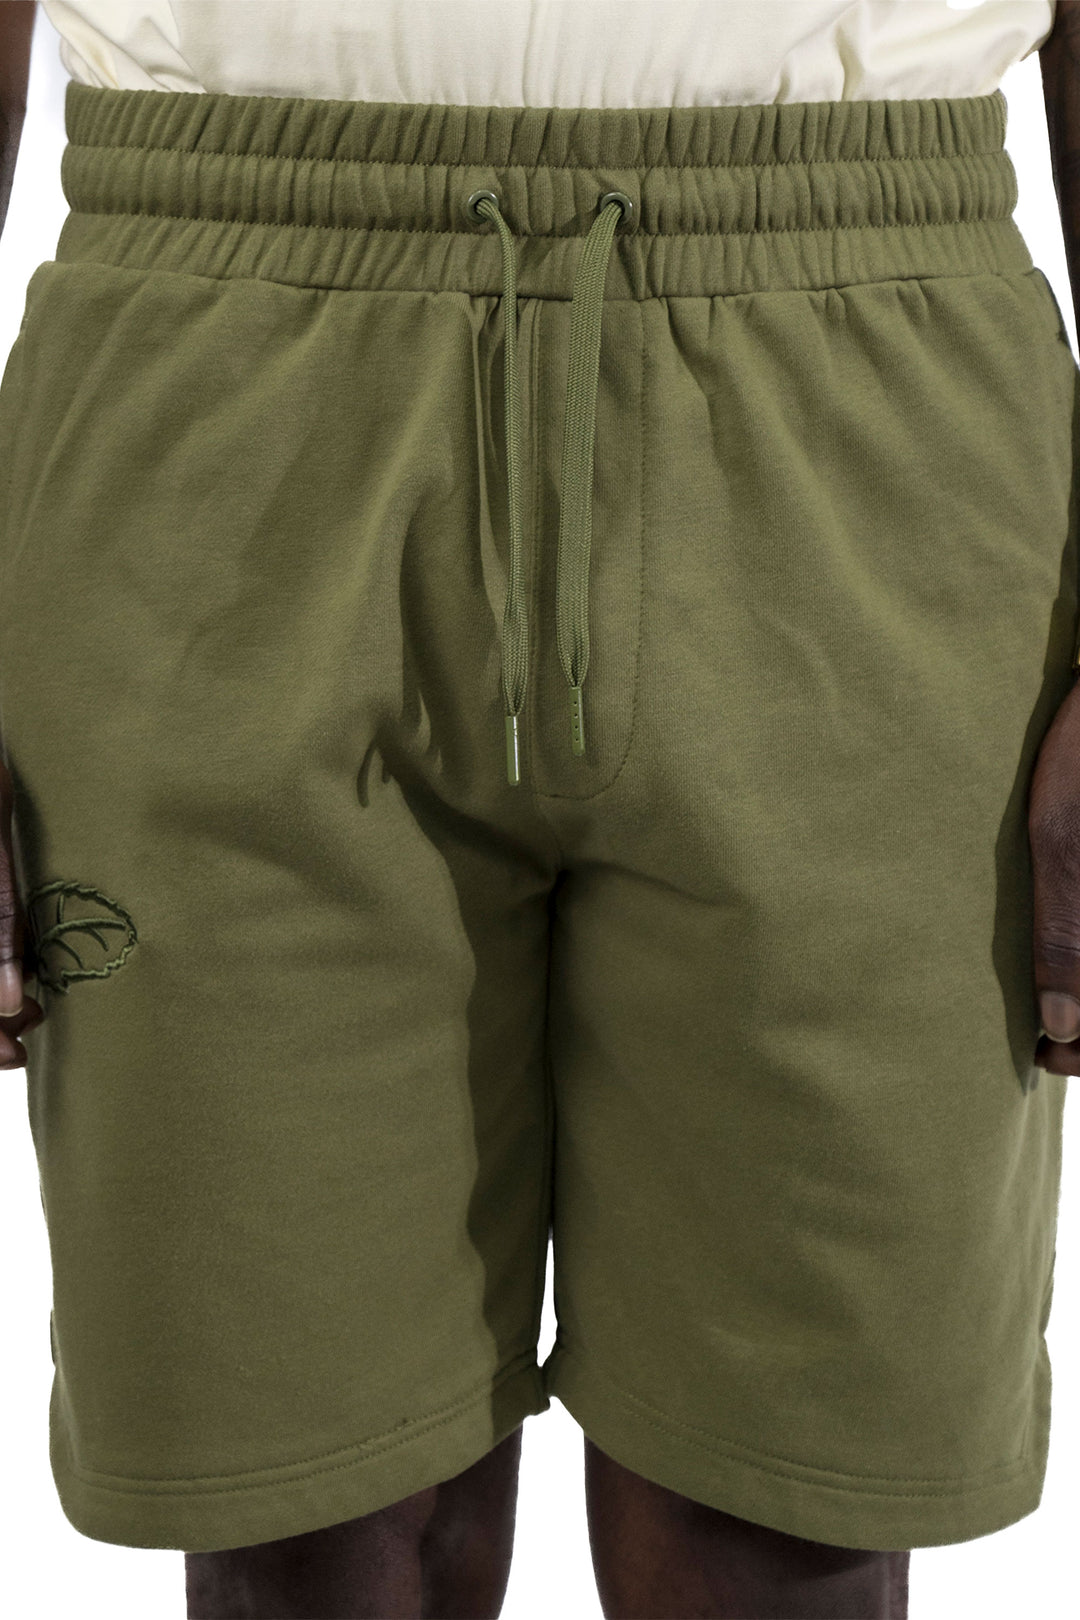 Essential Olive Classic Leaf Shorts